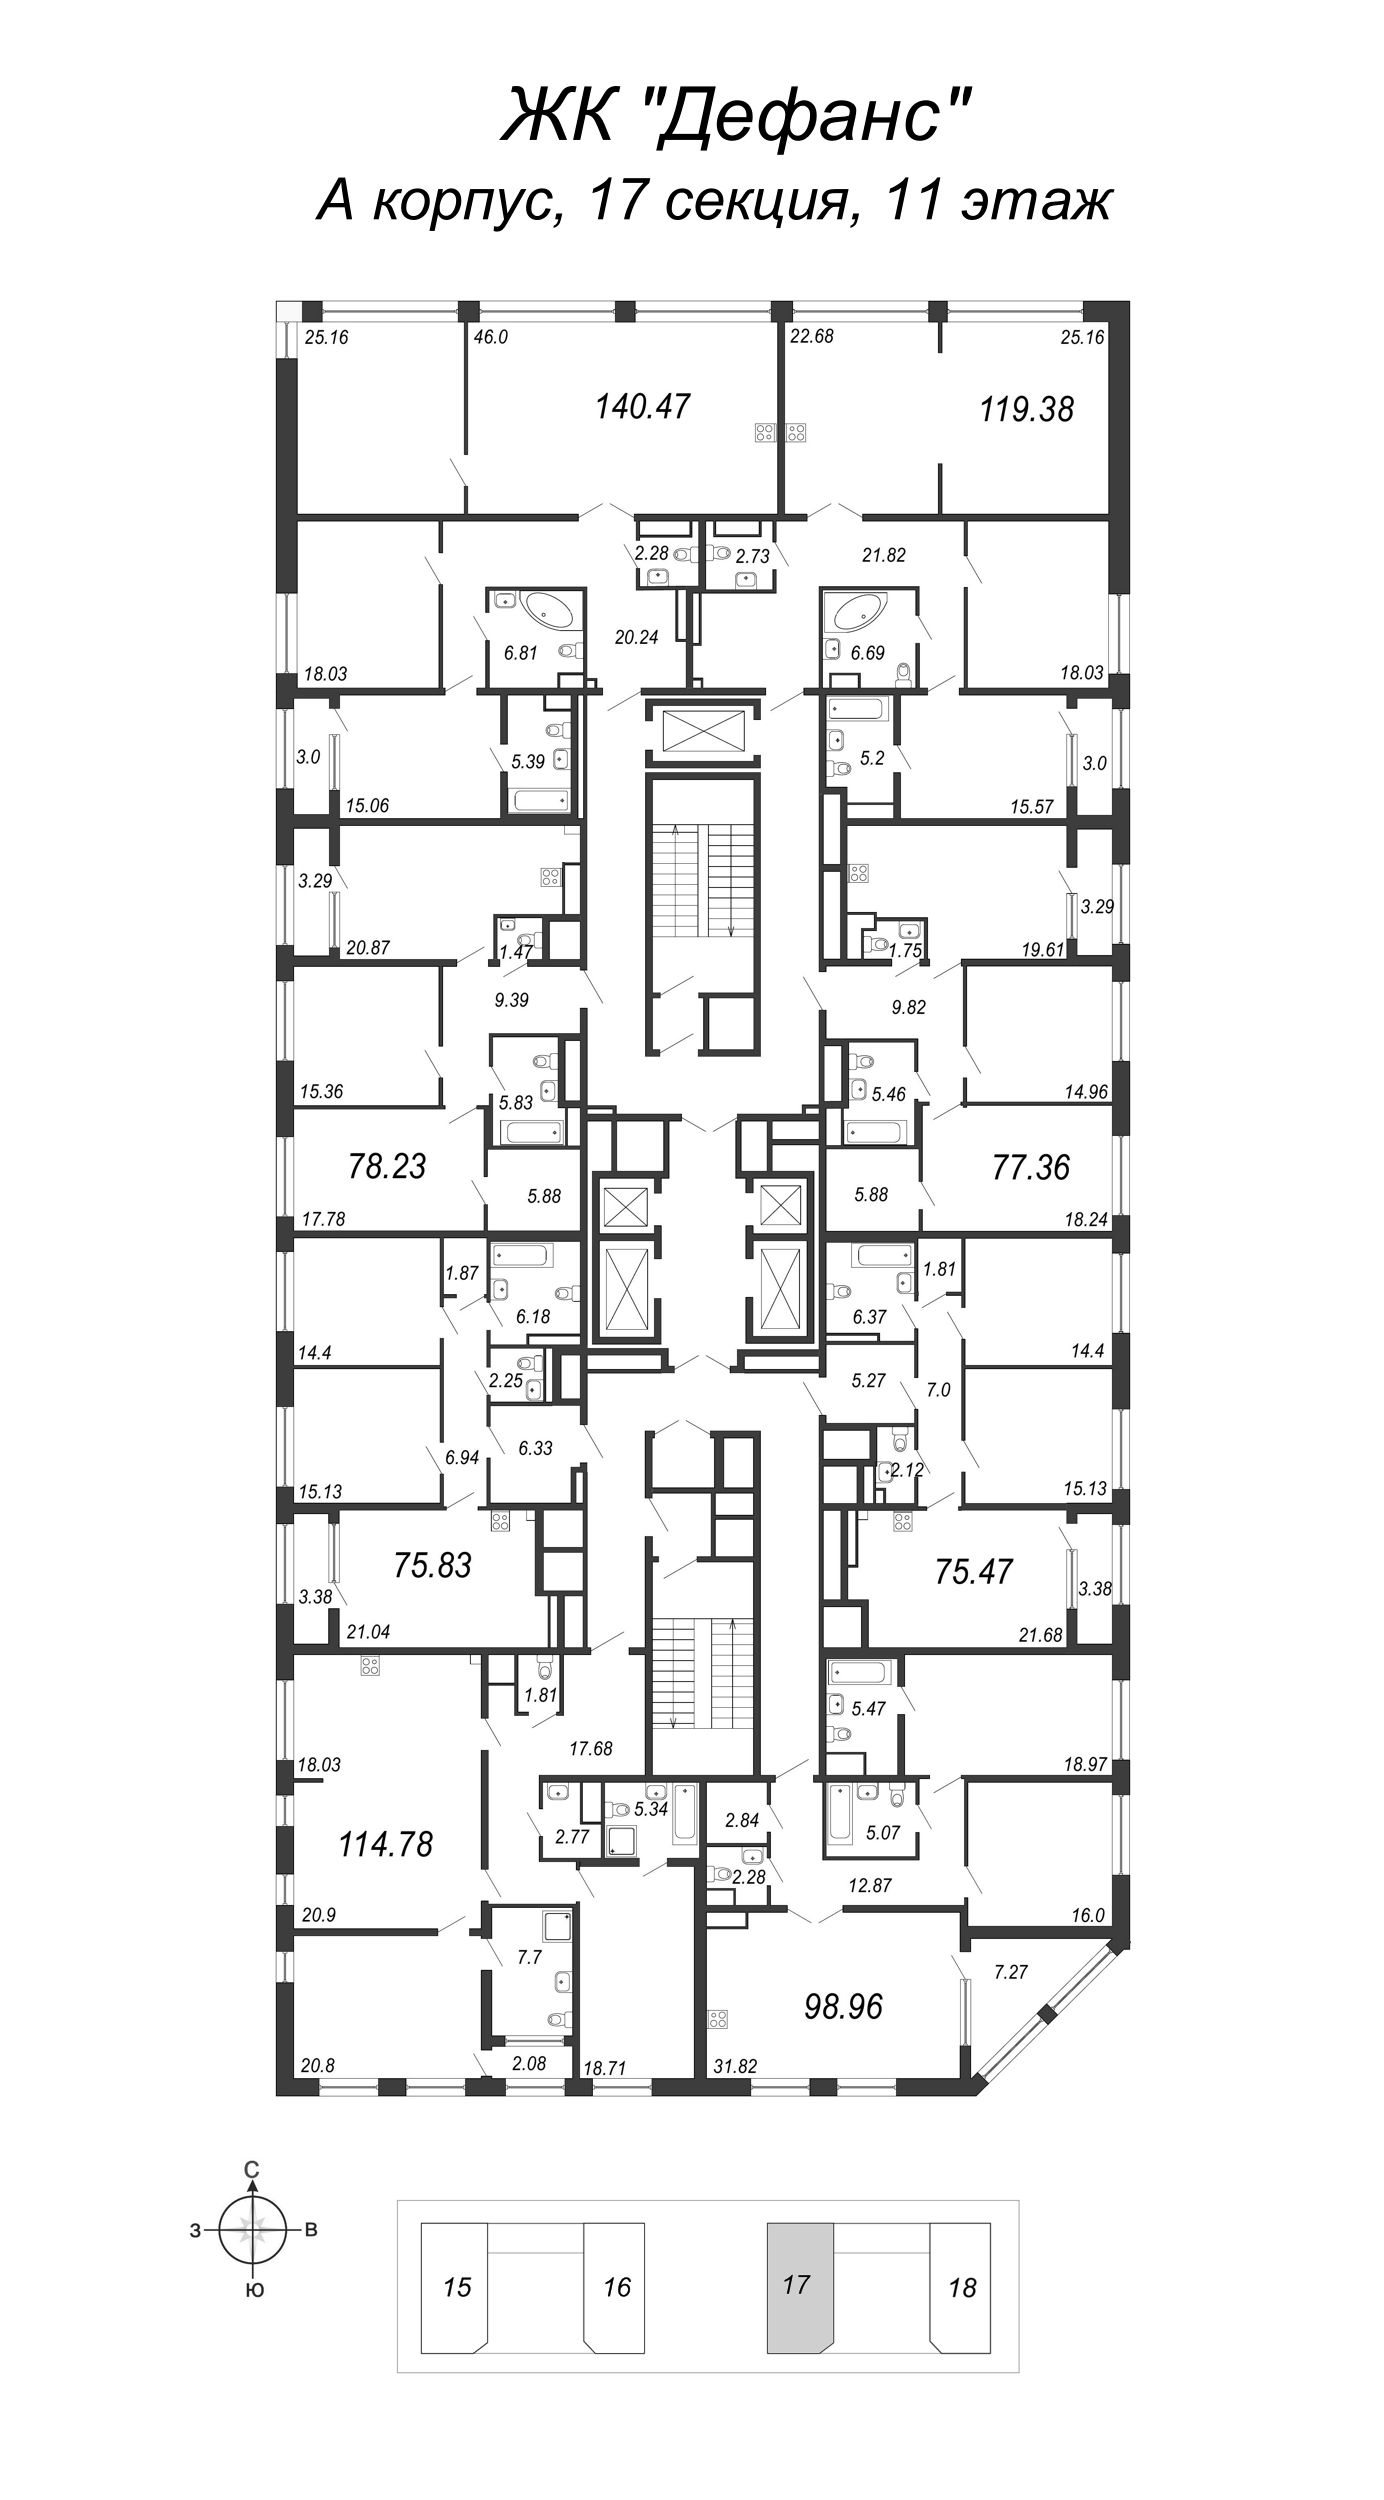 3-комнатная (Евро) квартира, 77.36 м² - планировка этажа